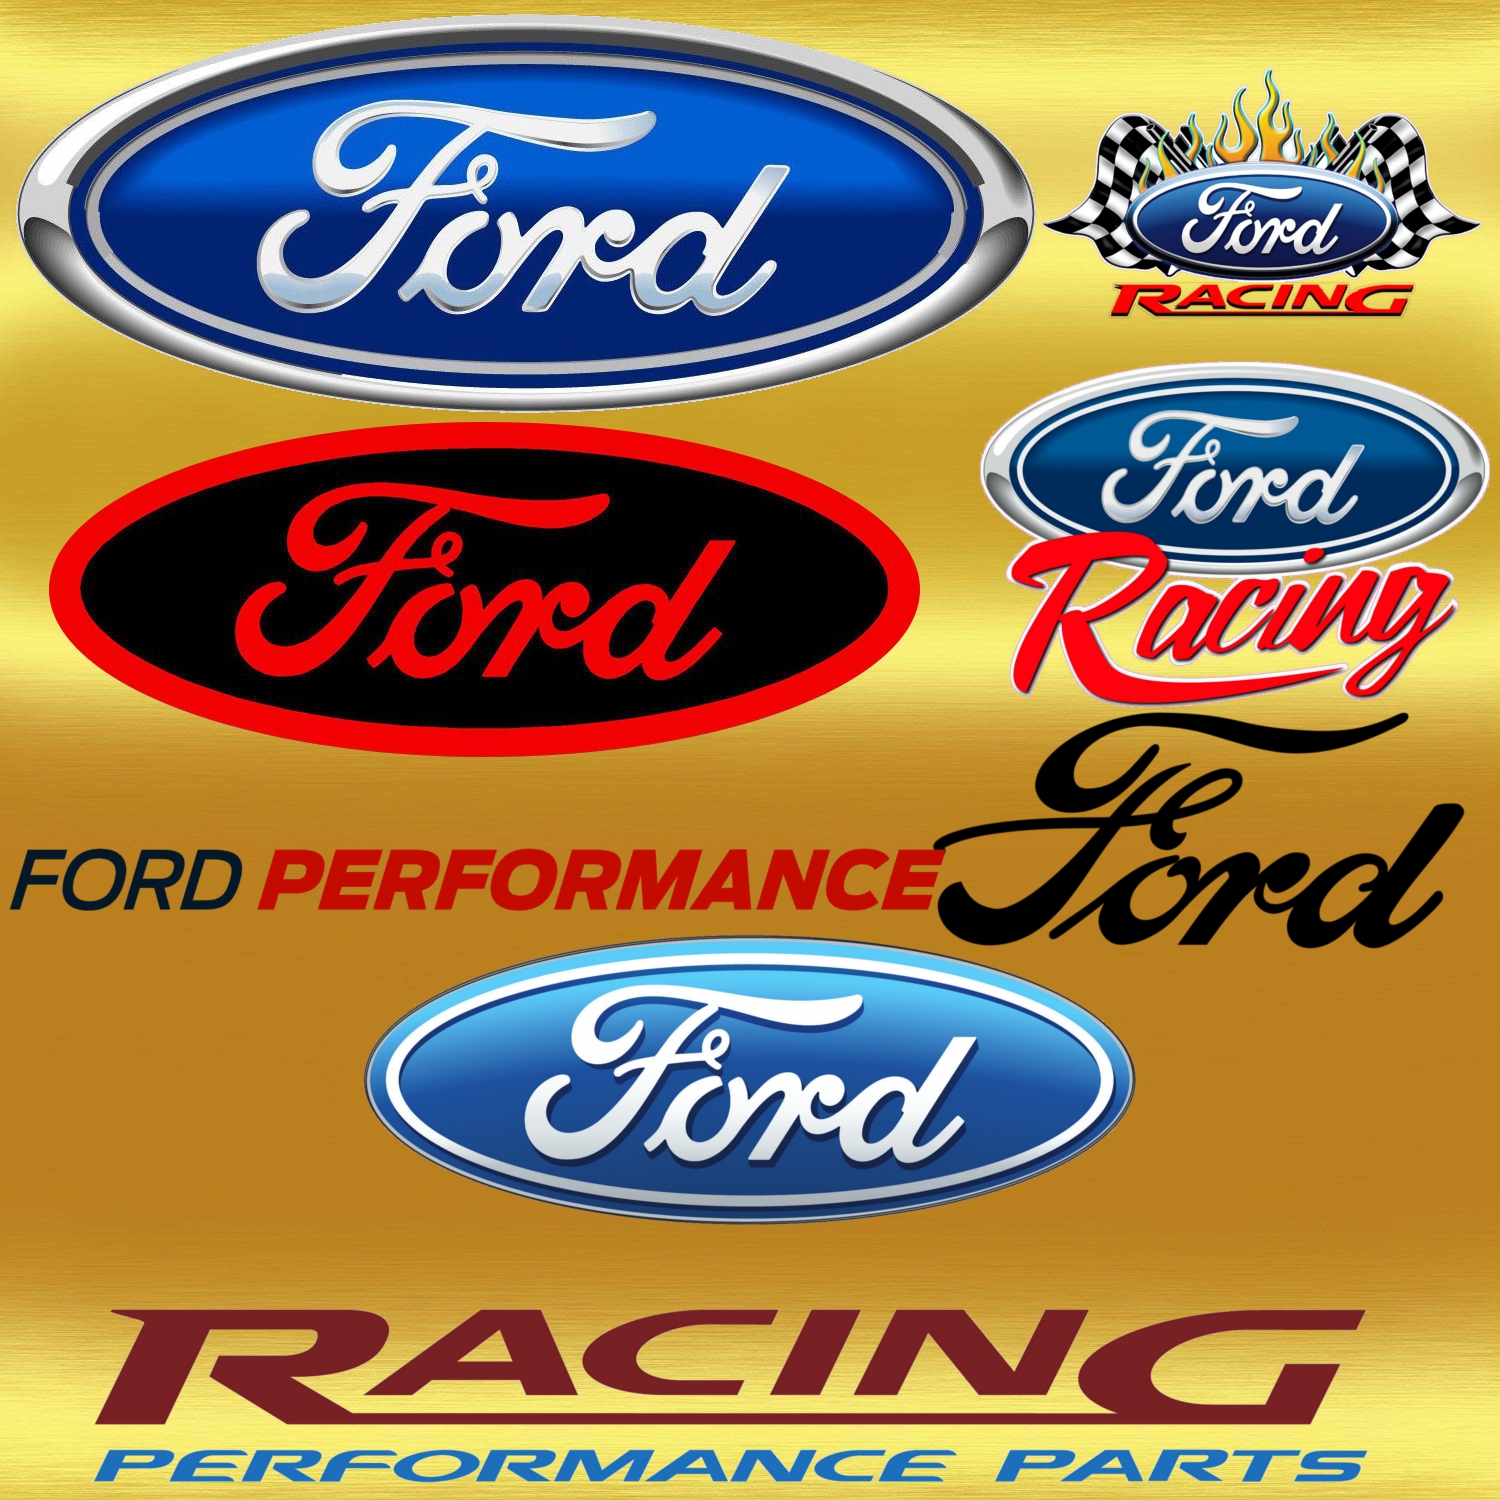 Ford logos.jpg